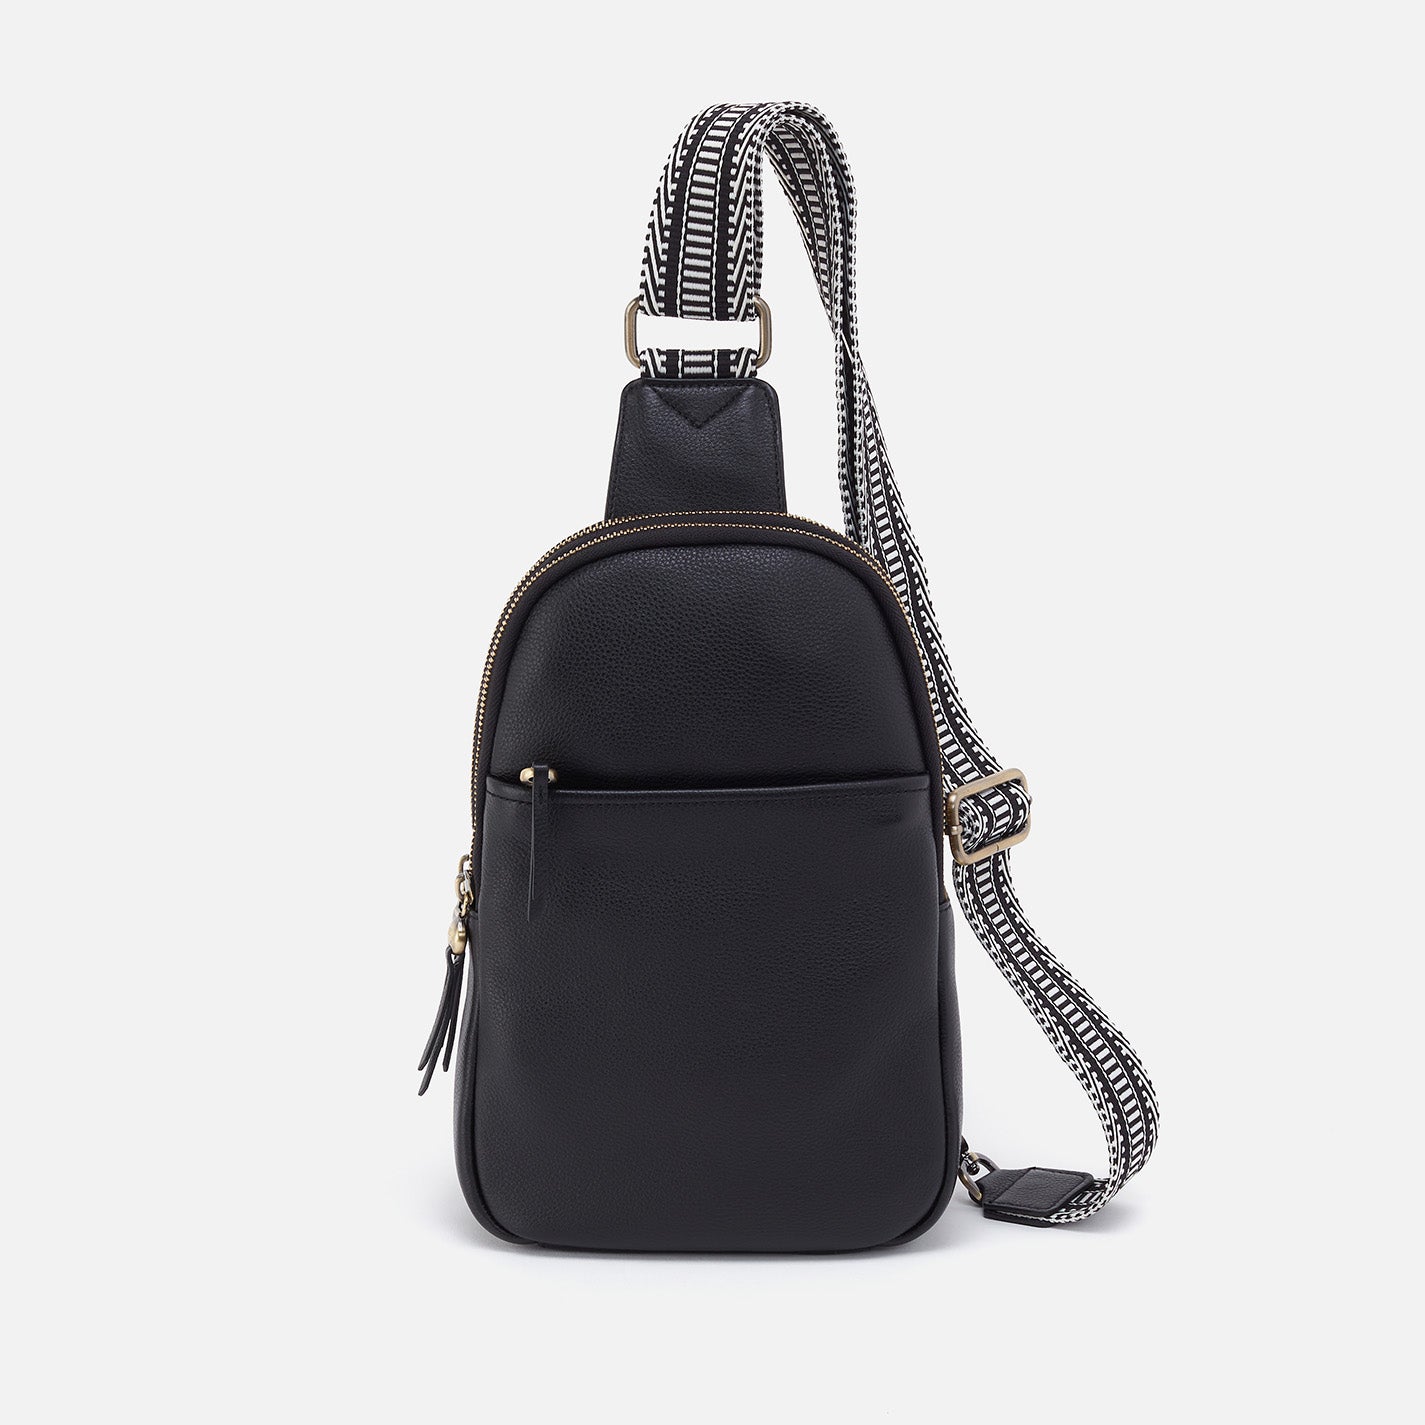 LIKE STYLE Black Sling Bag Attractive Printed Formal Sling Bag BLACK -  Price in India | Flipkart.com